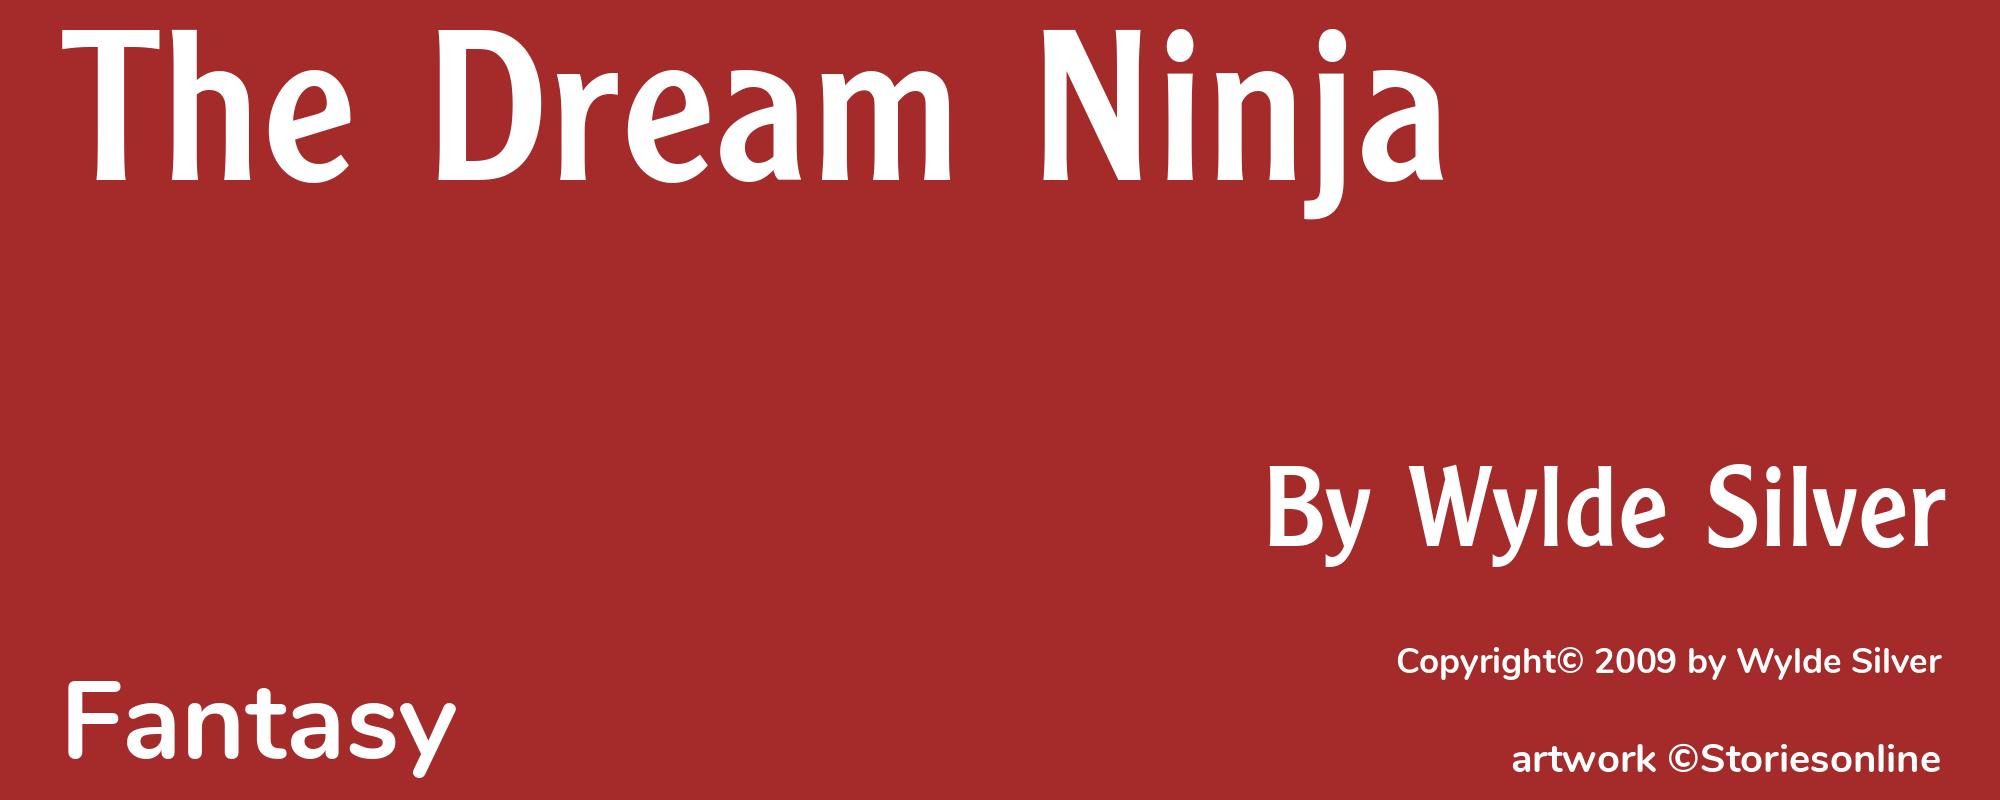 The Dream Ninja - Cover